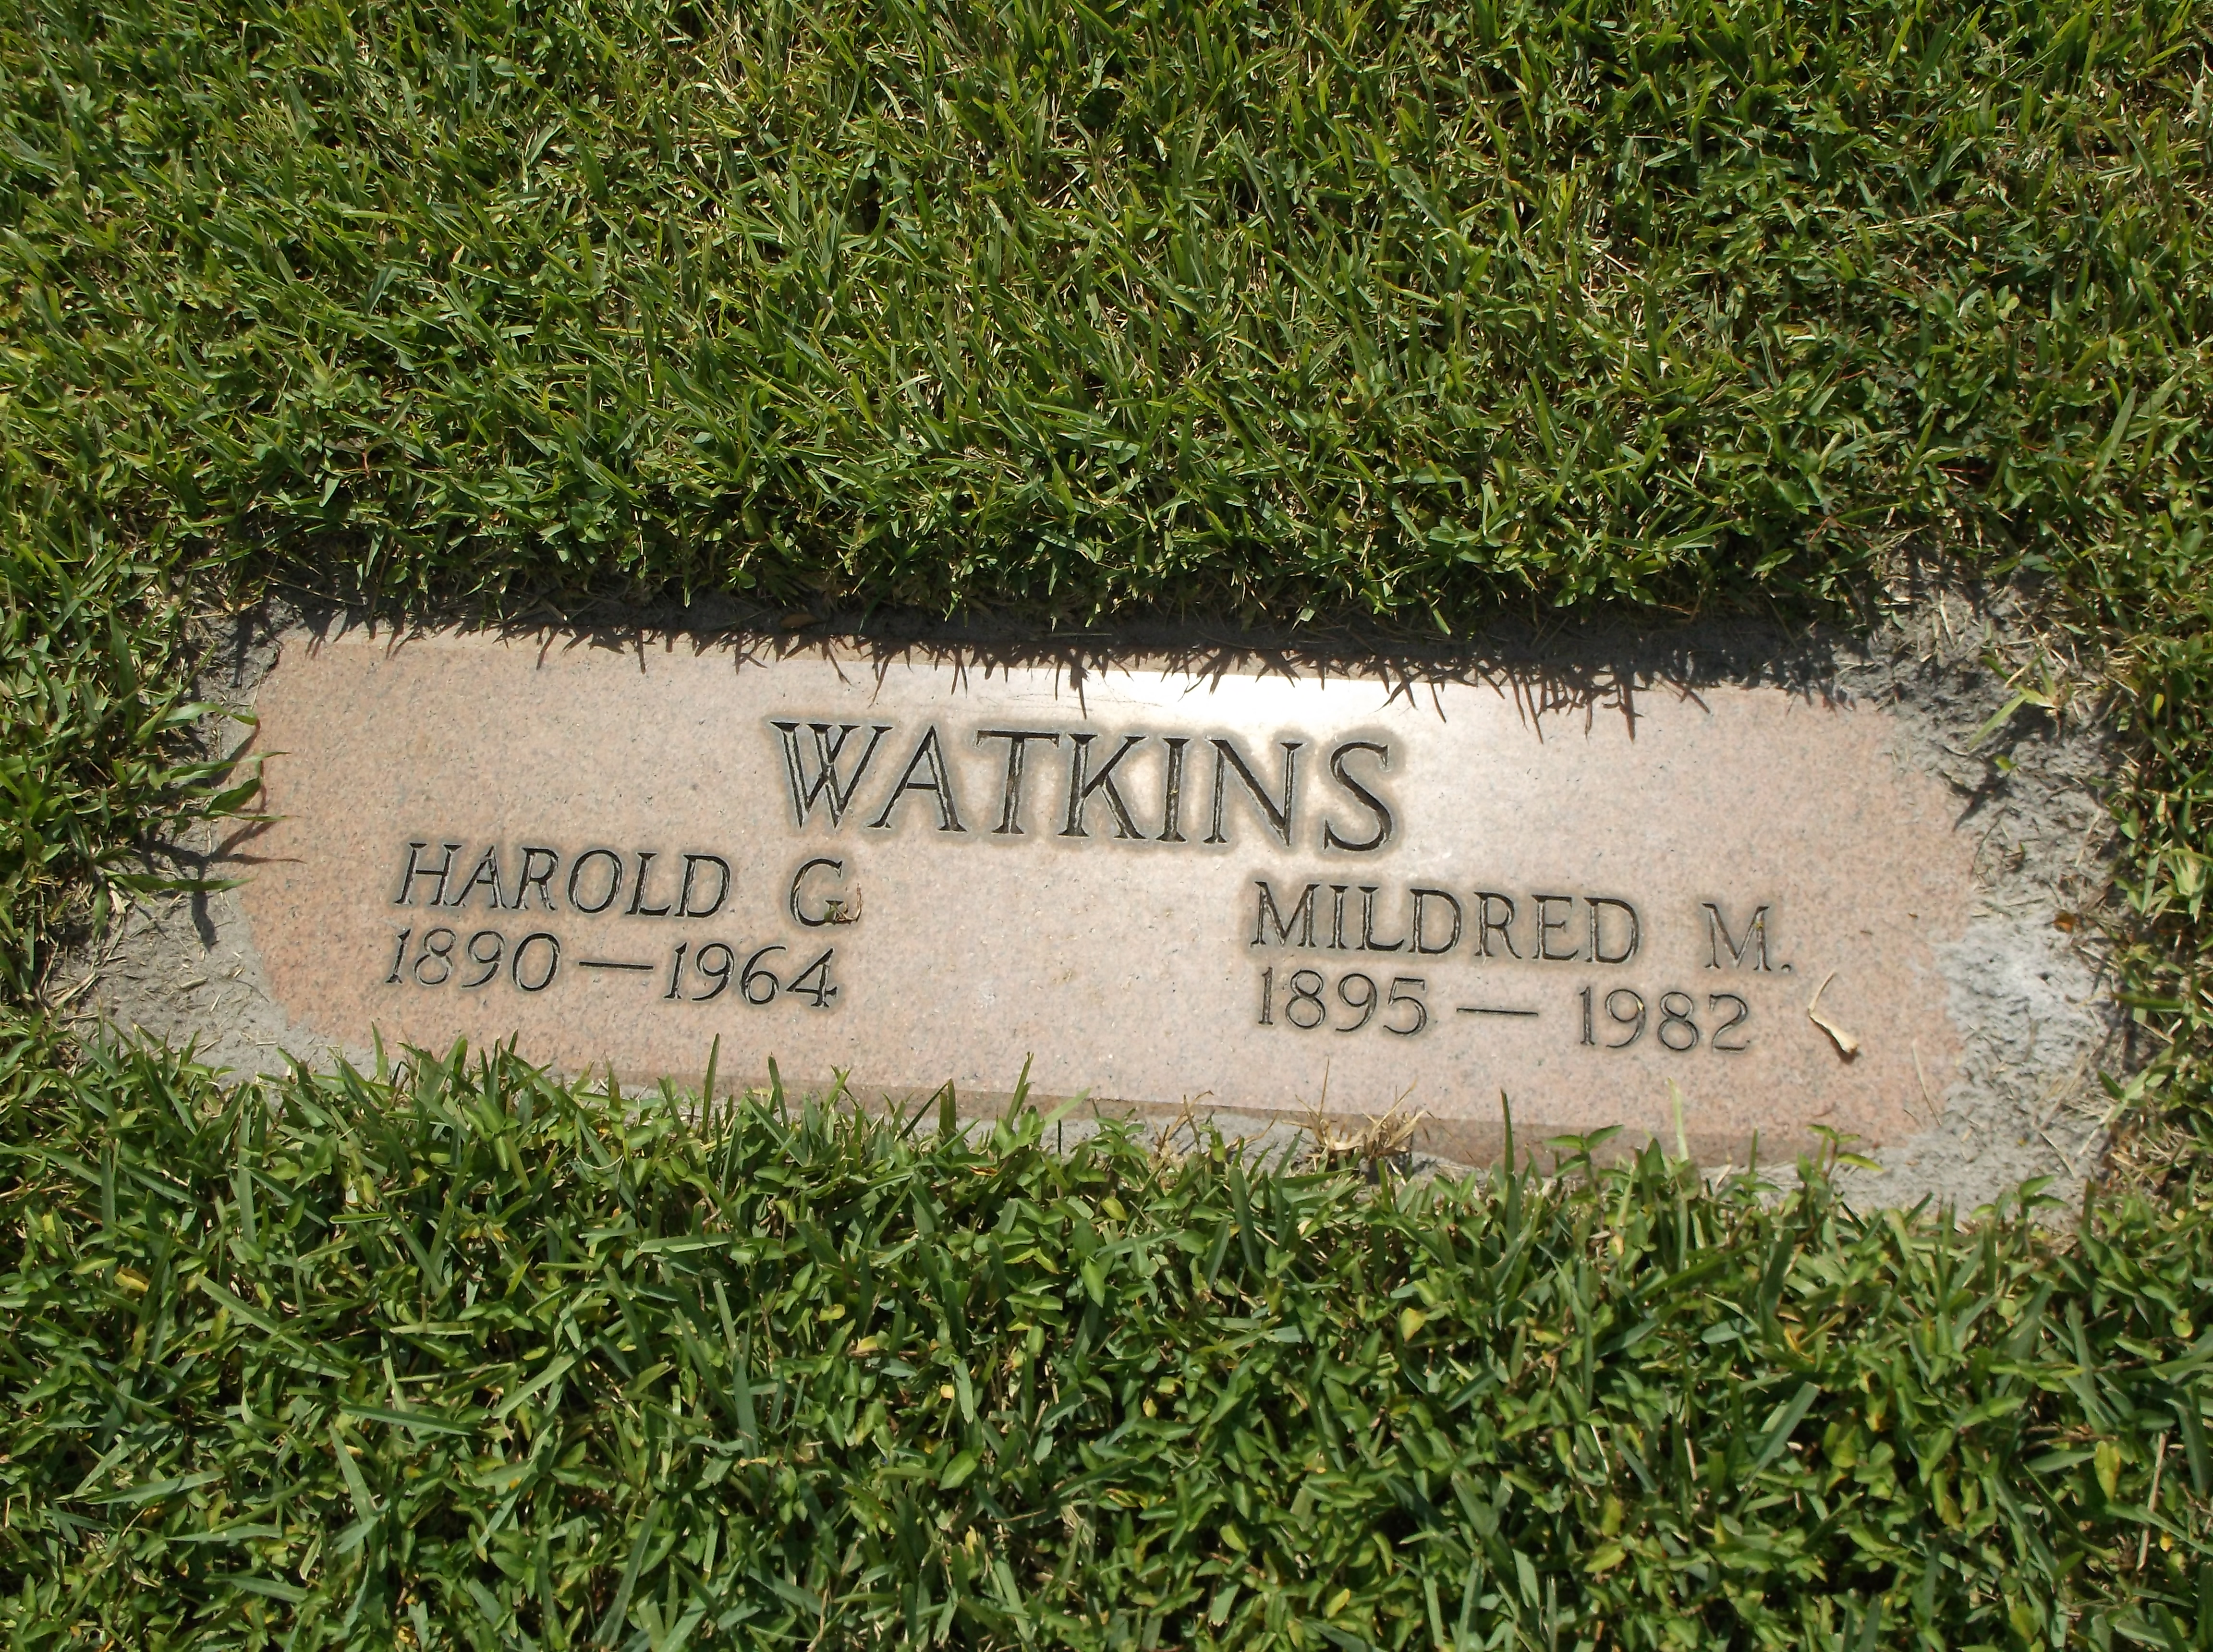 Harold G Watkins